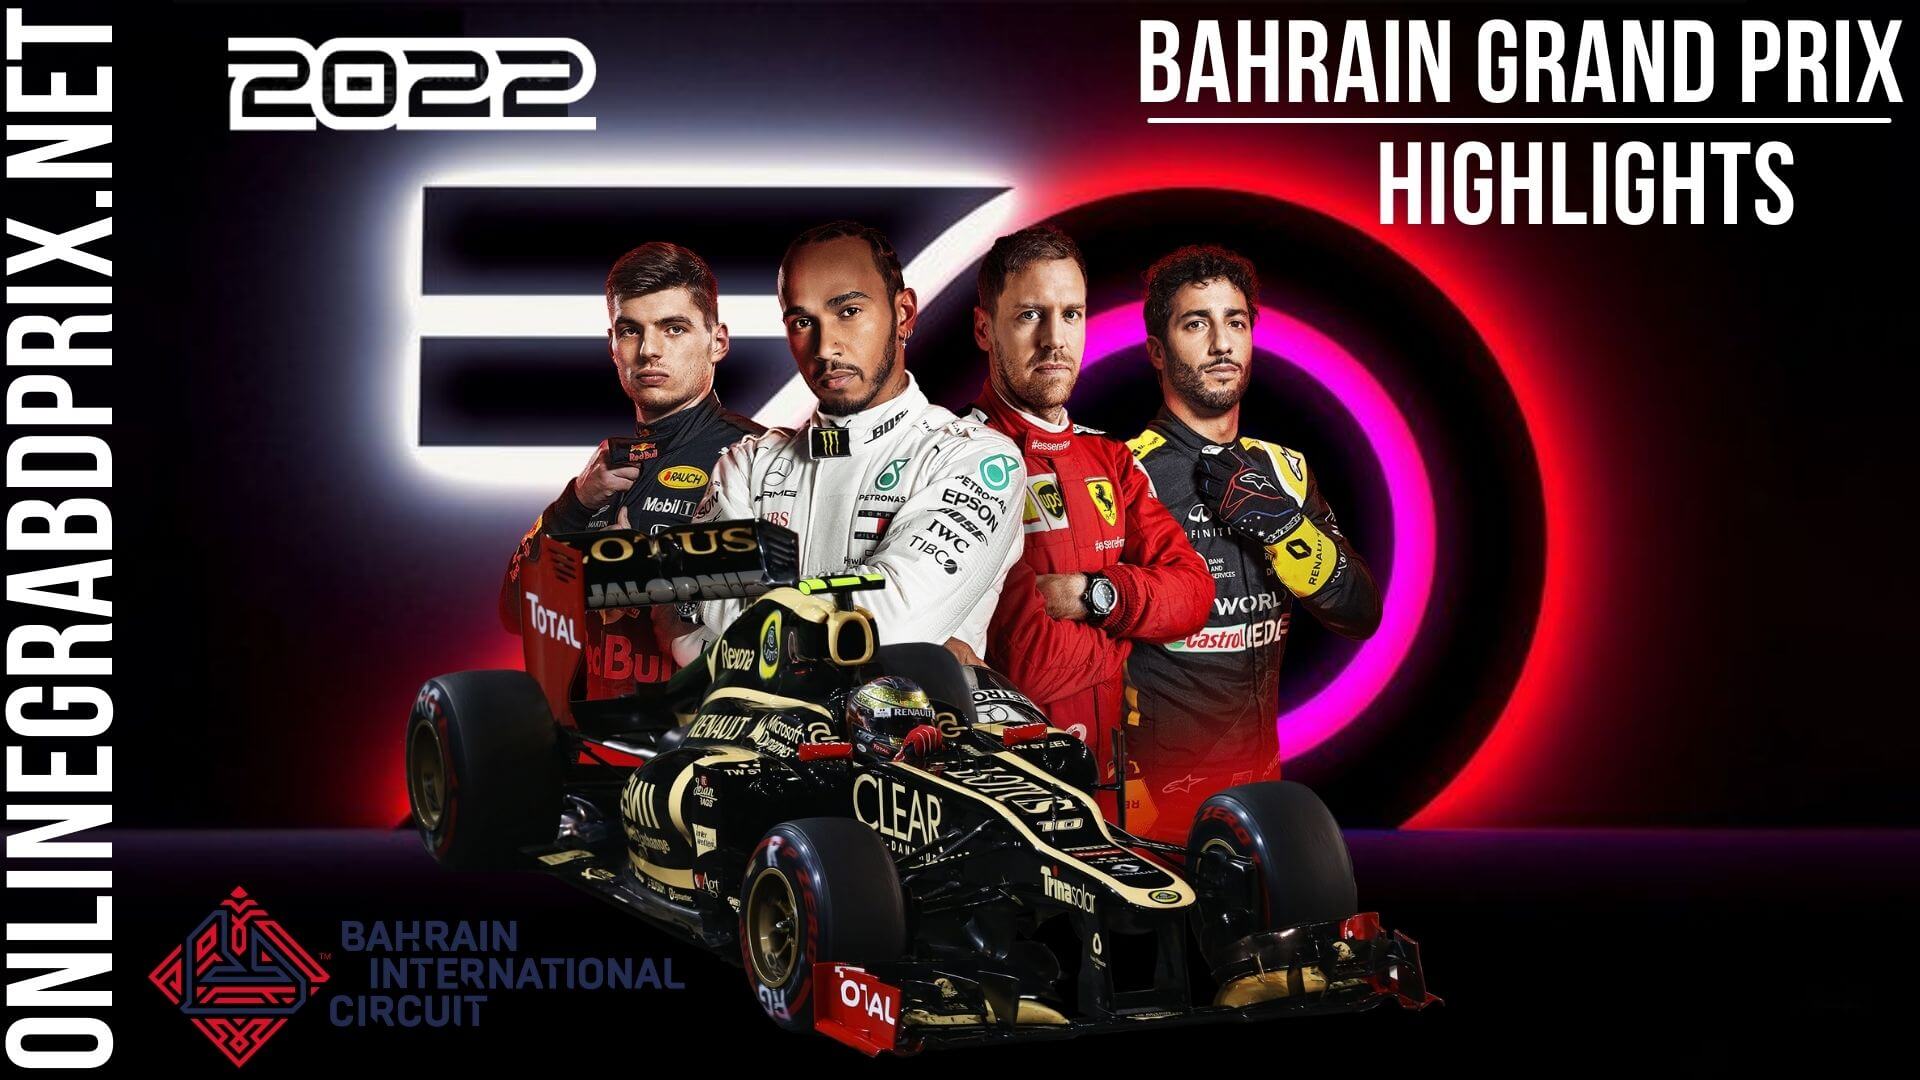 Bahrain GP F1 Highlights 2022